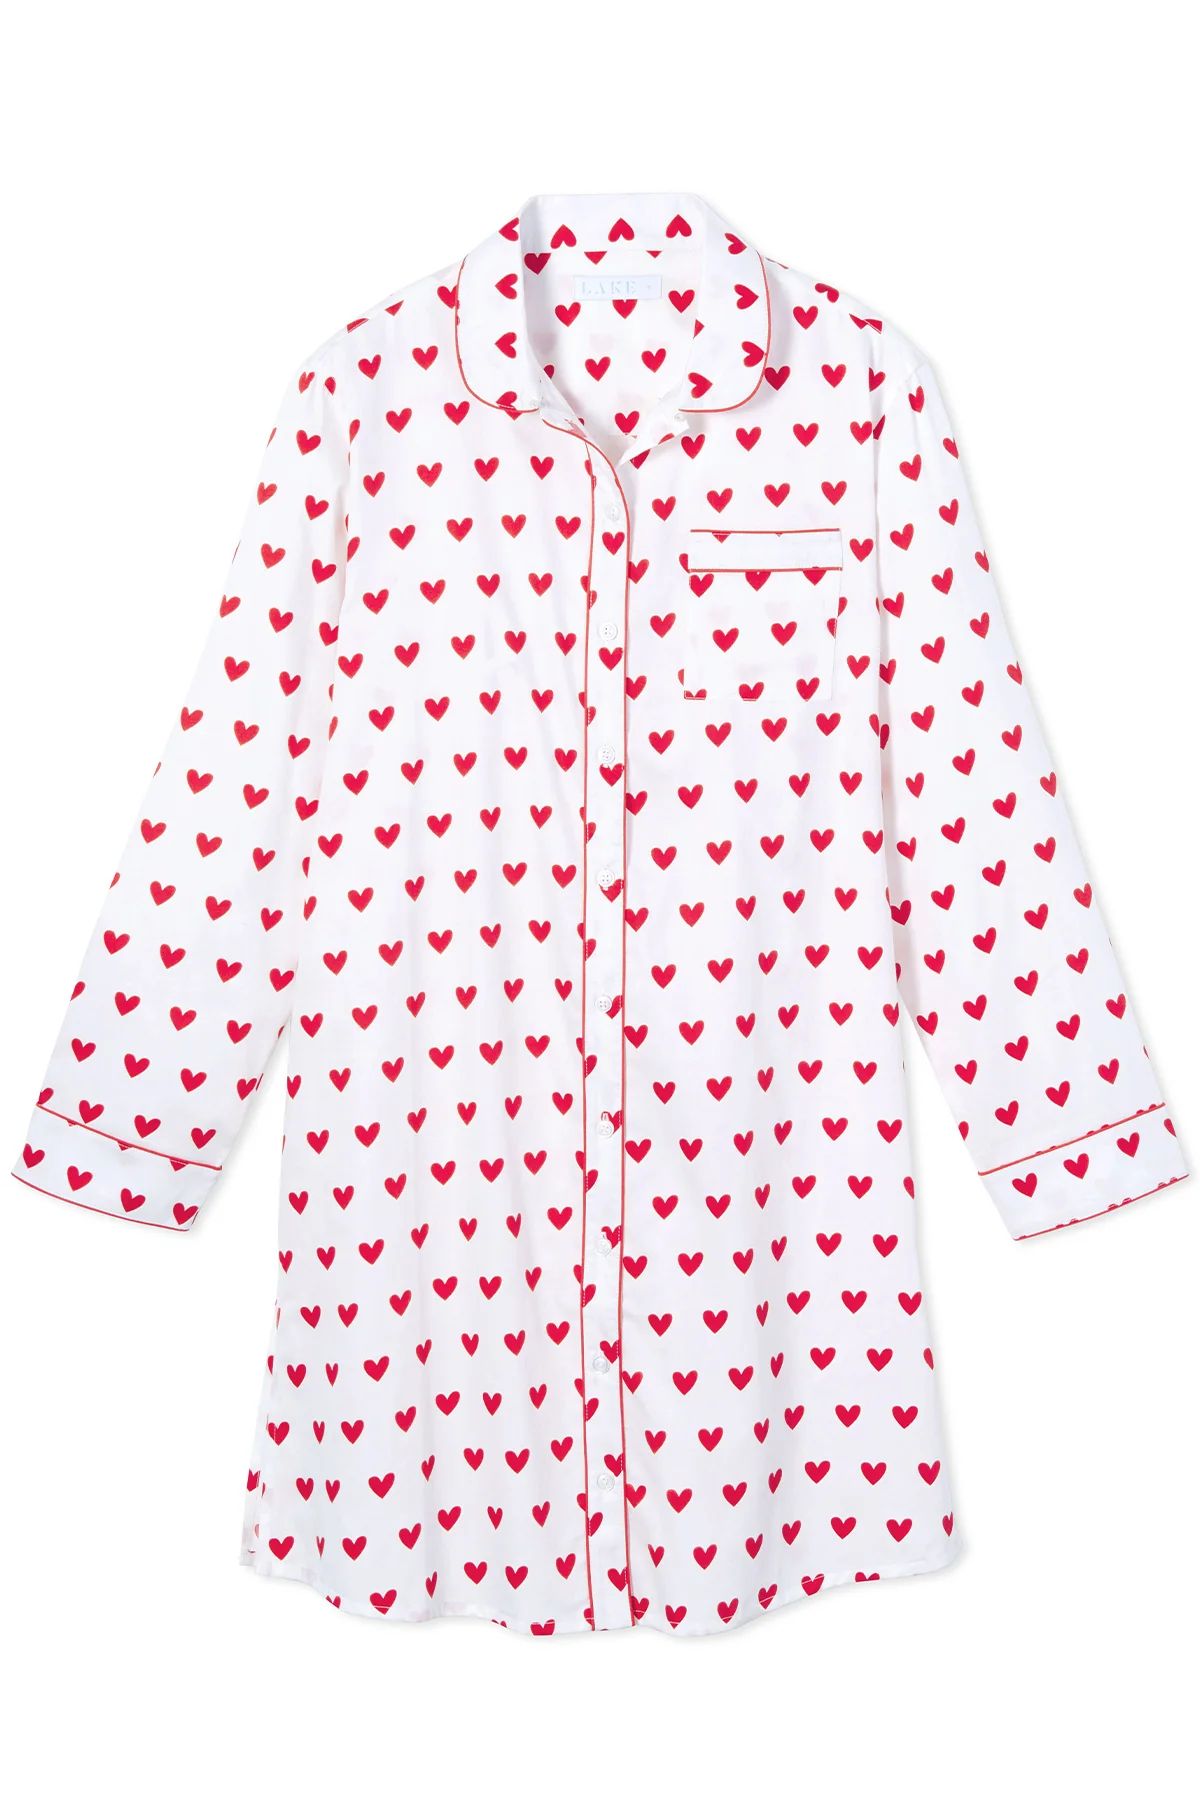 Poplin Nightshirt in Heart | LAKE Pajamas